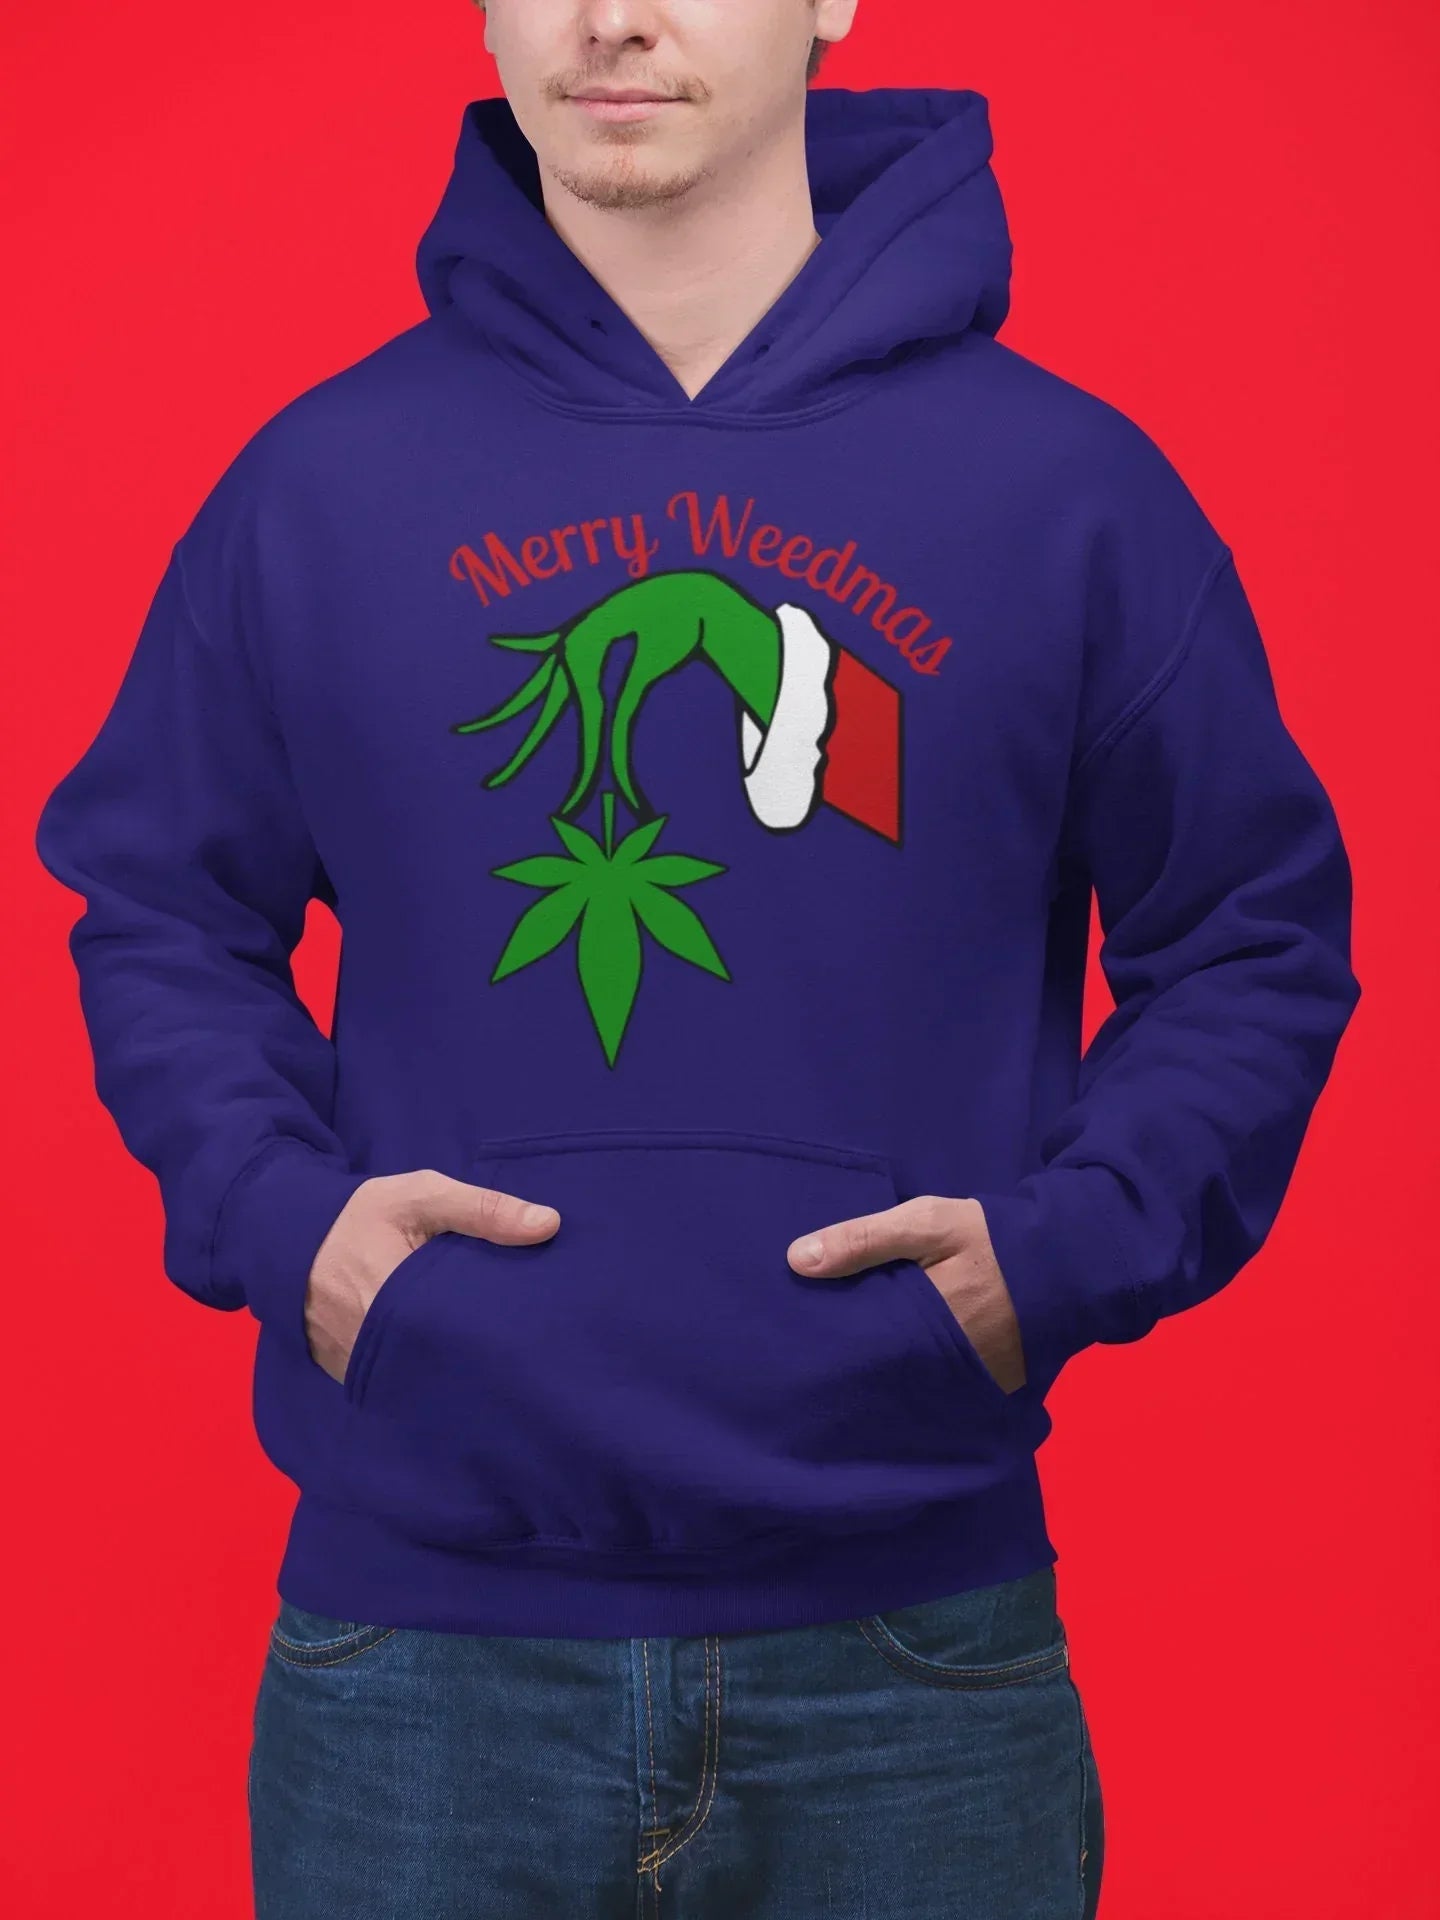 Merry Weedmas Shirt, Gift for Her, Stoner Girl, Cannabis Clothes, Gift for Him, Marijuana Sweatshirt, Weed Mom, Hoodie, Christmas Sweater HMDesignStudioUS